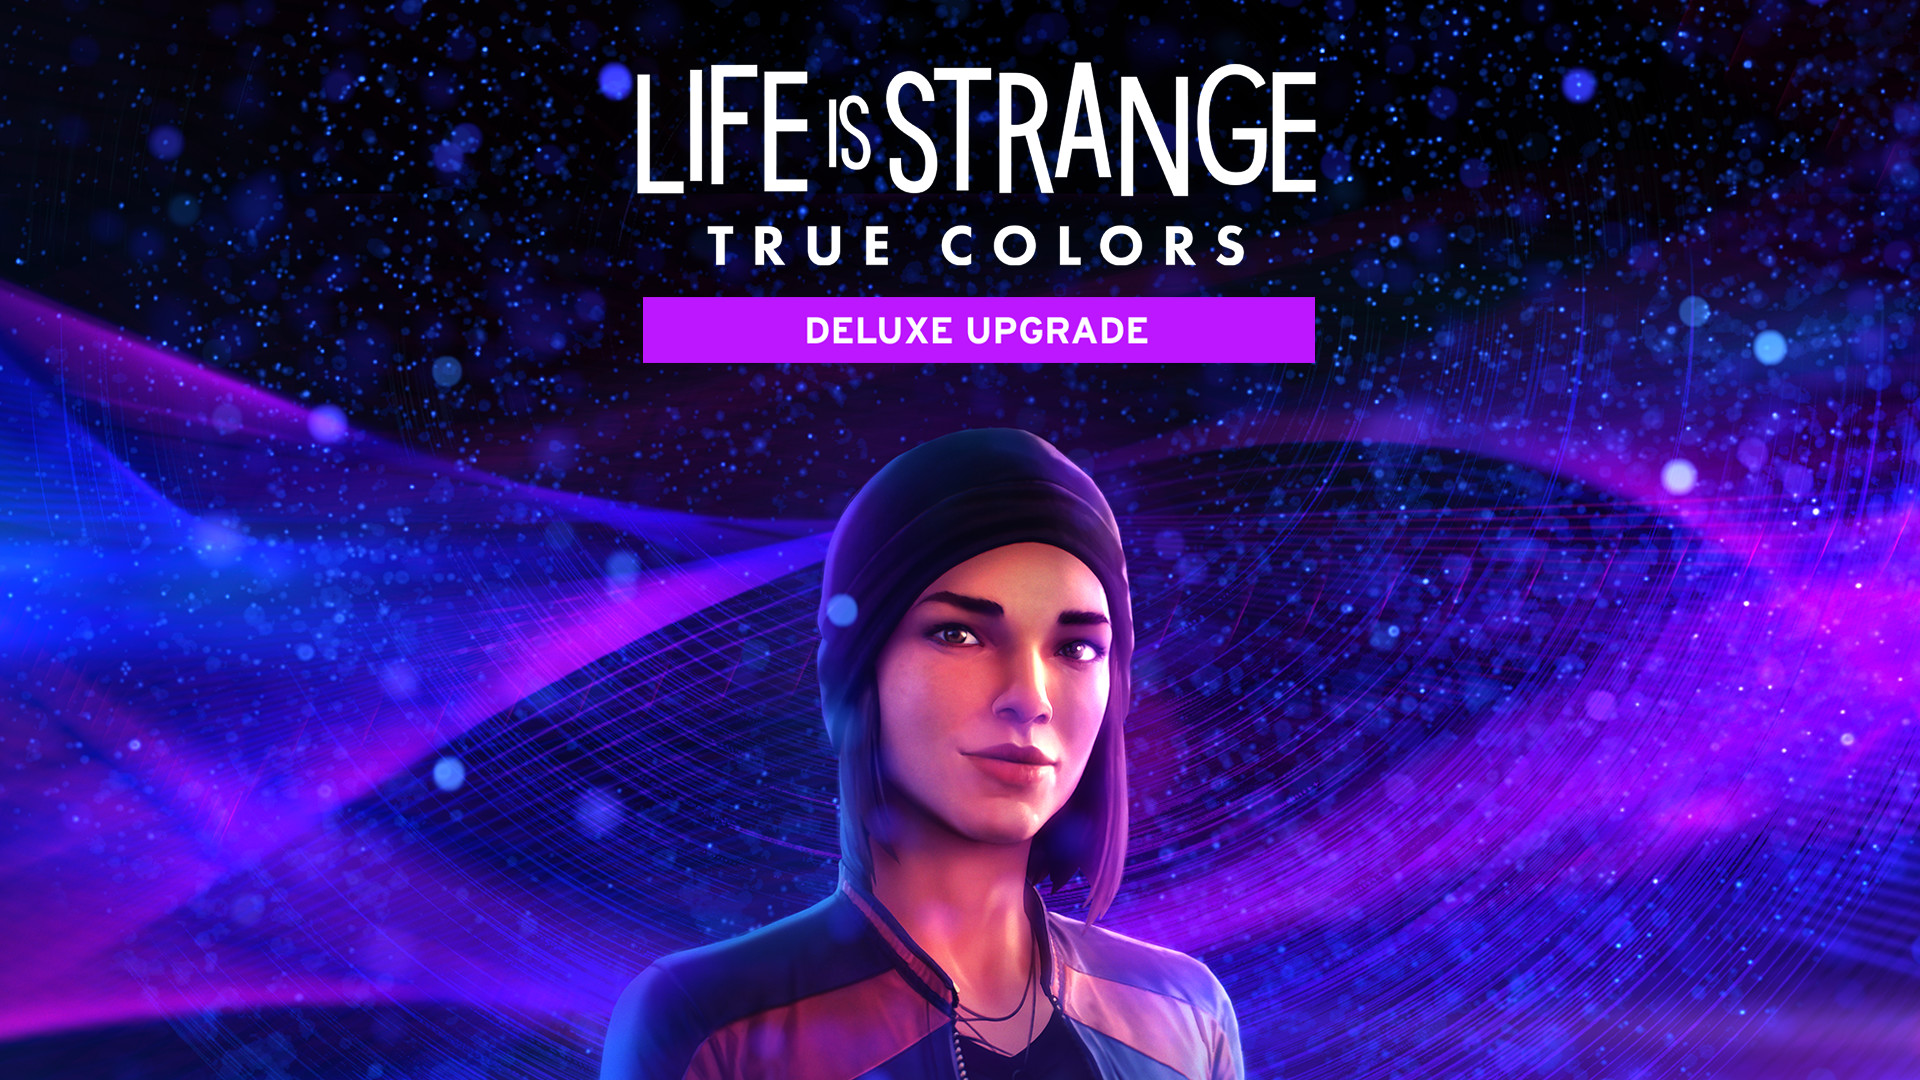 Jogos – Life is Strange: True Colors (Análise)